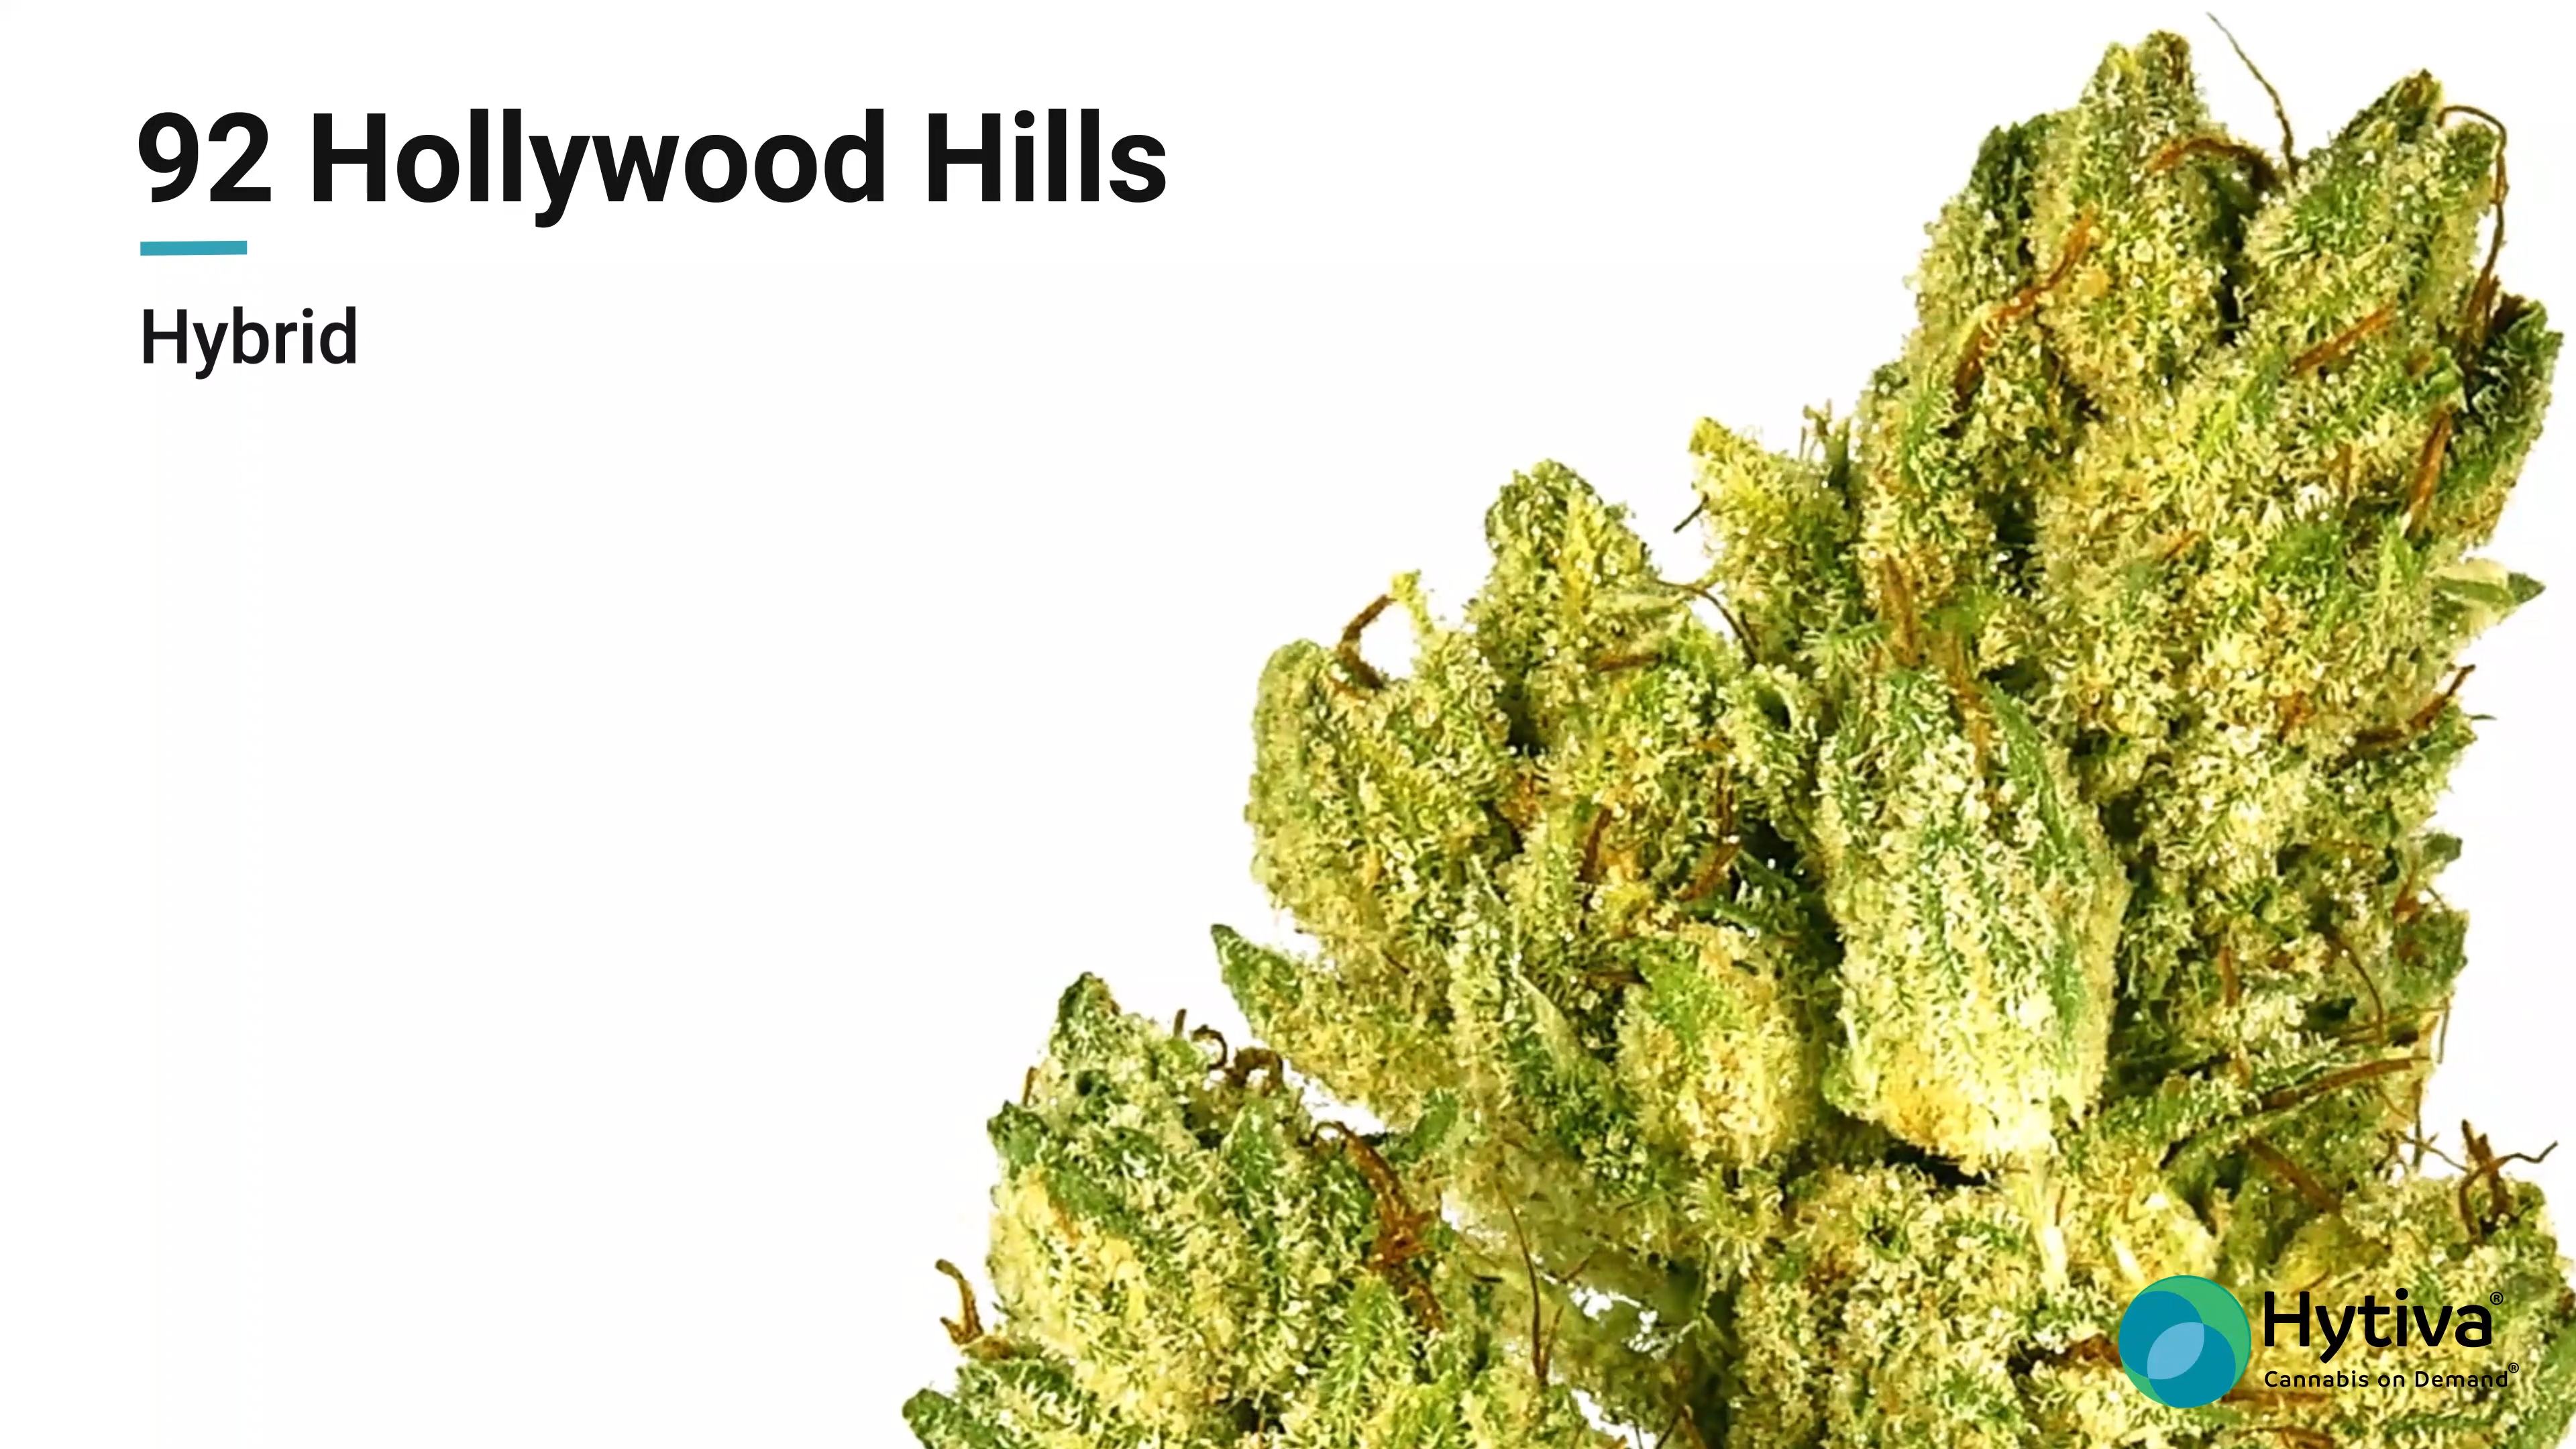 92 Hollywood Hills - Hybrid Strain